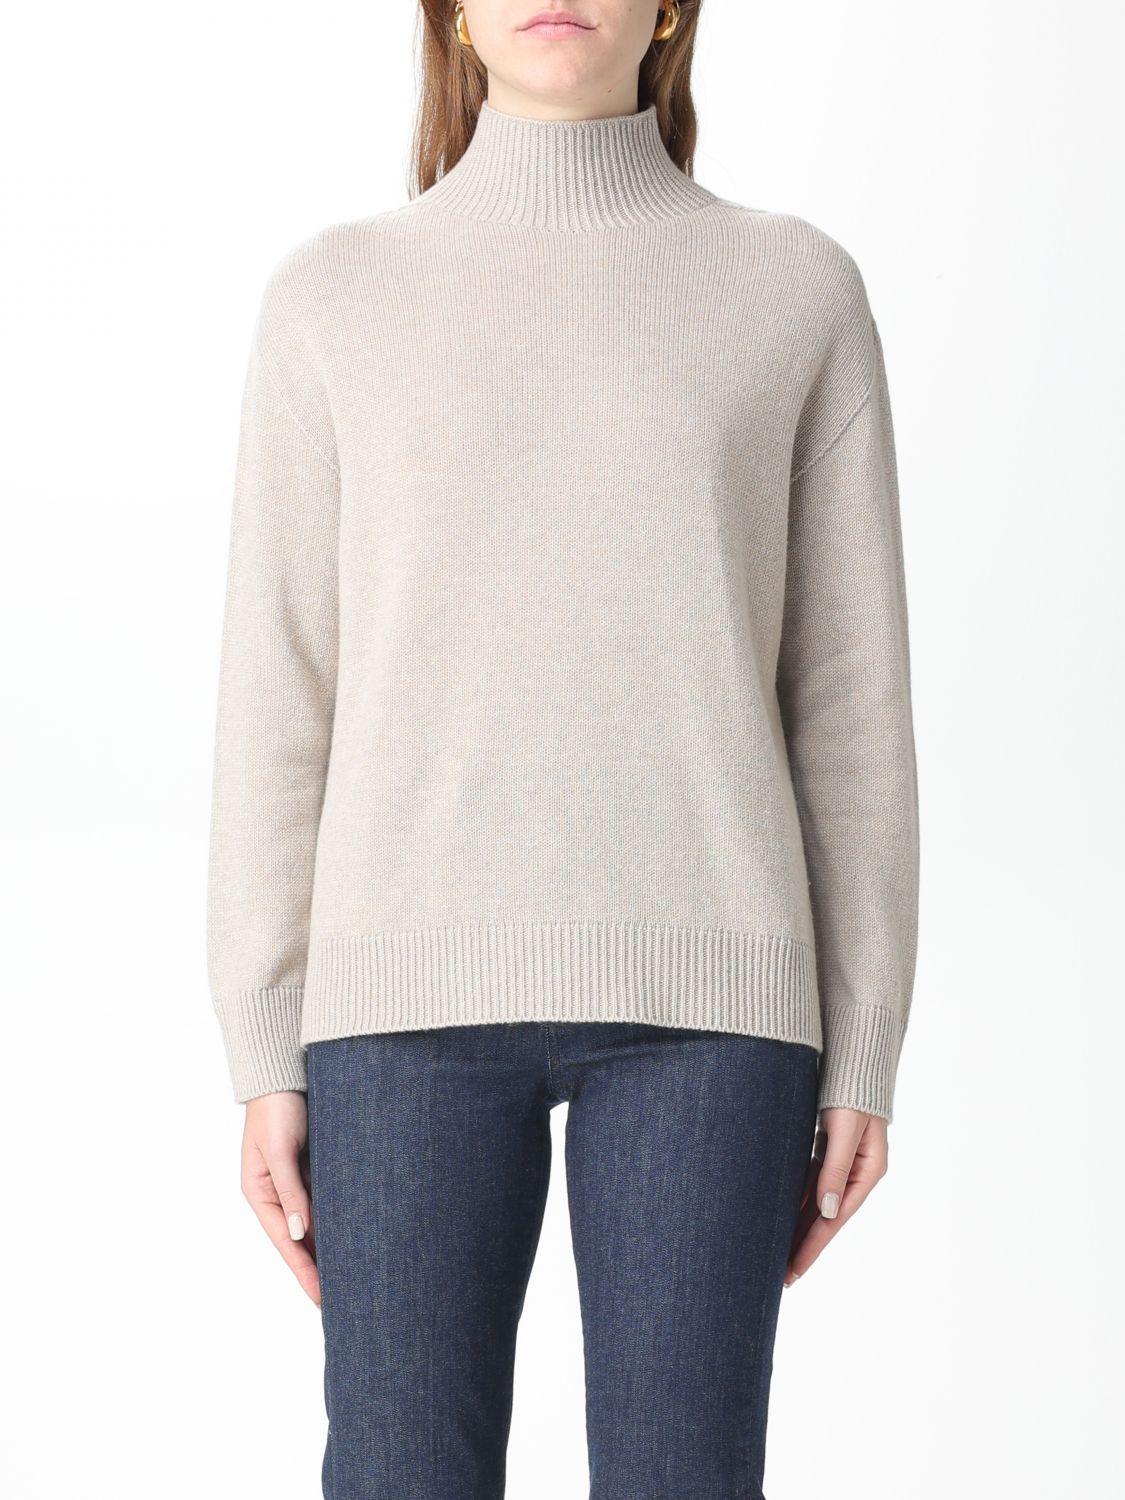 Max Mara Cashmere Sweater in White | Lyst Canada